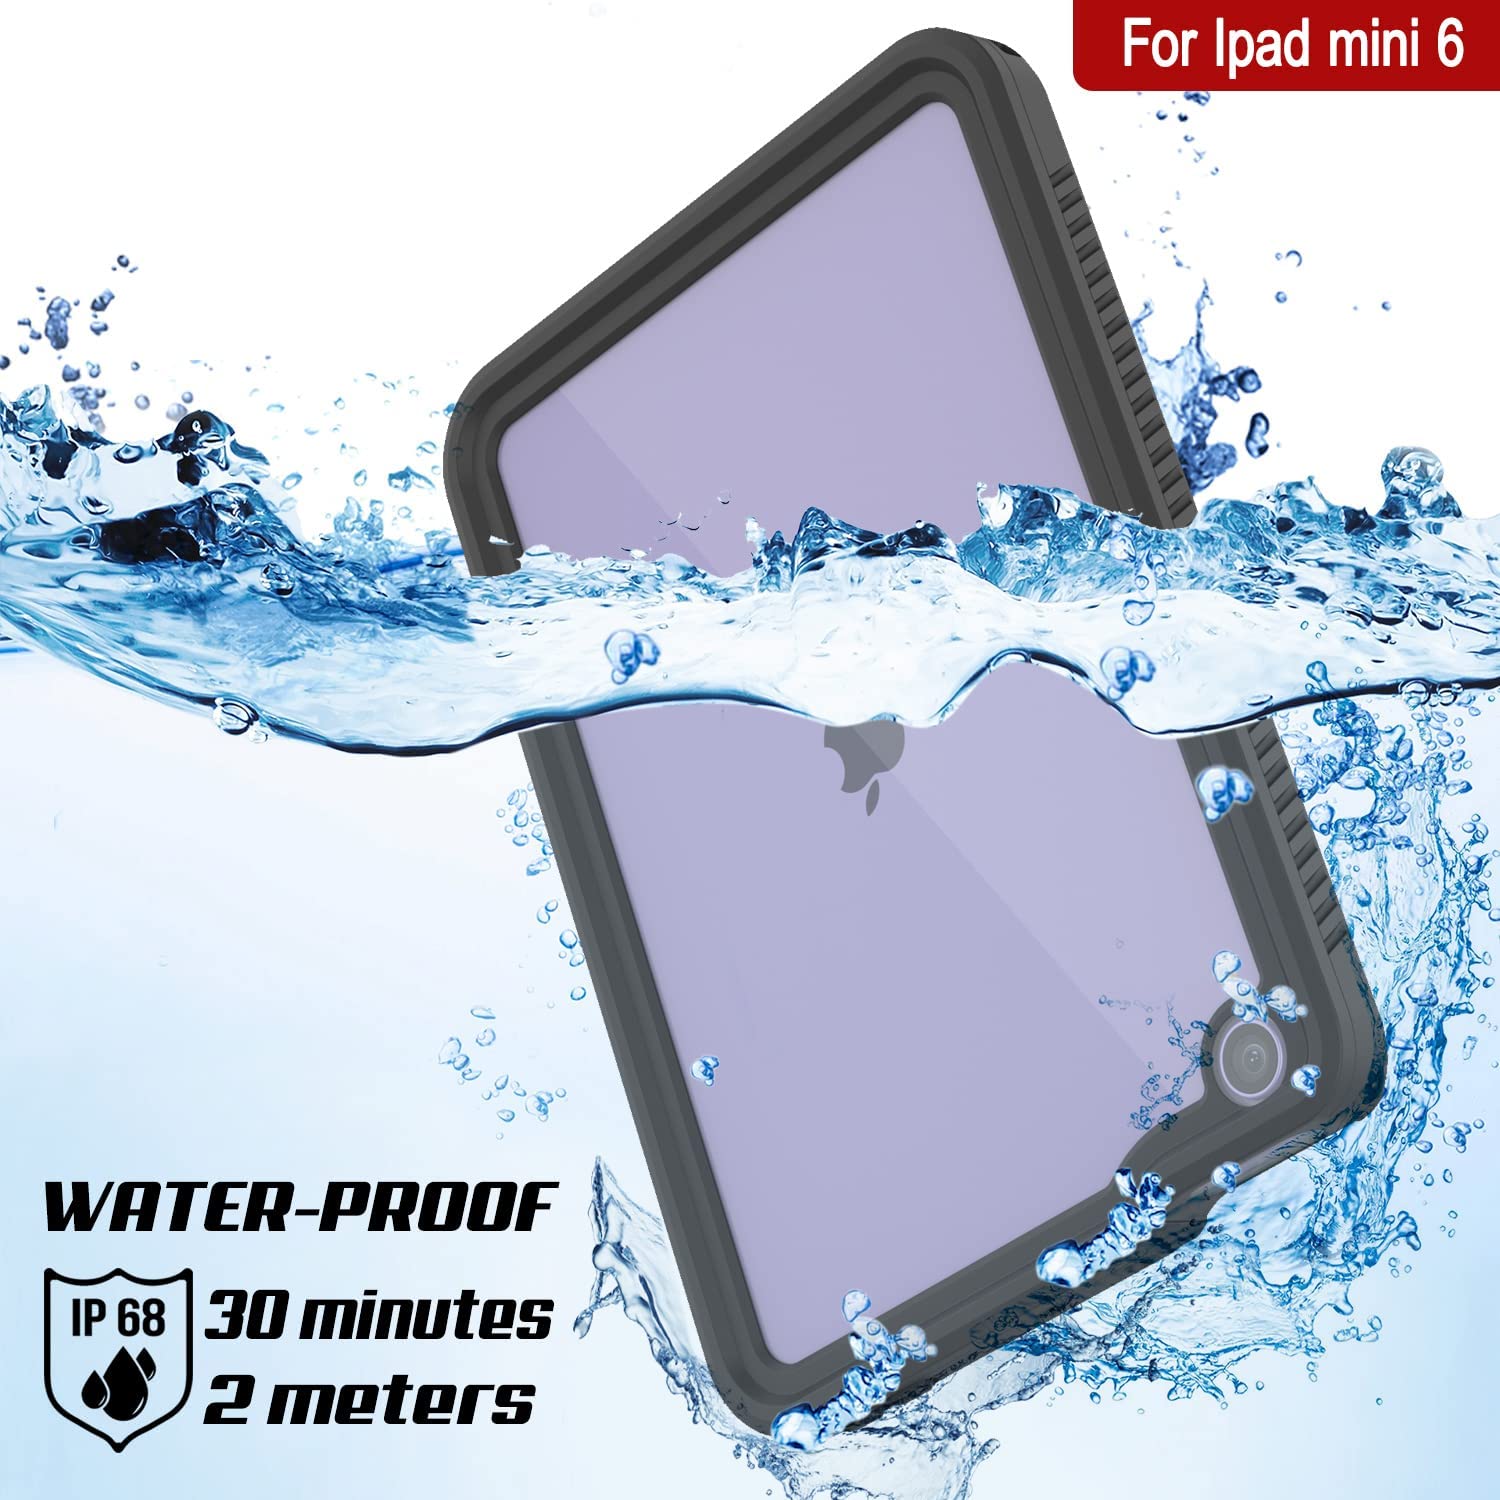 MN-iPad-M6 | iPad mini 6 | IP68 Waterproof, Shock & Dust Proof Case